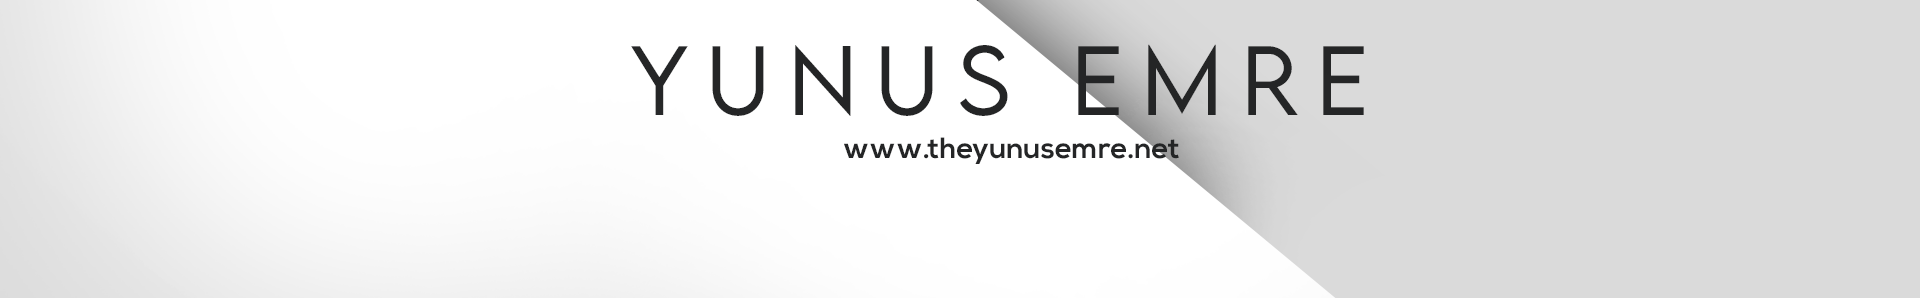 Yunus Emre's profile banner